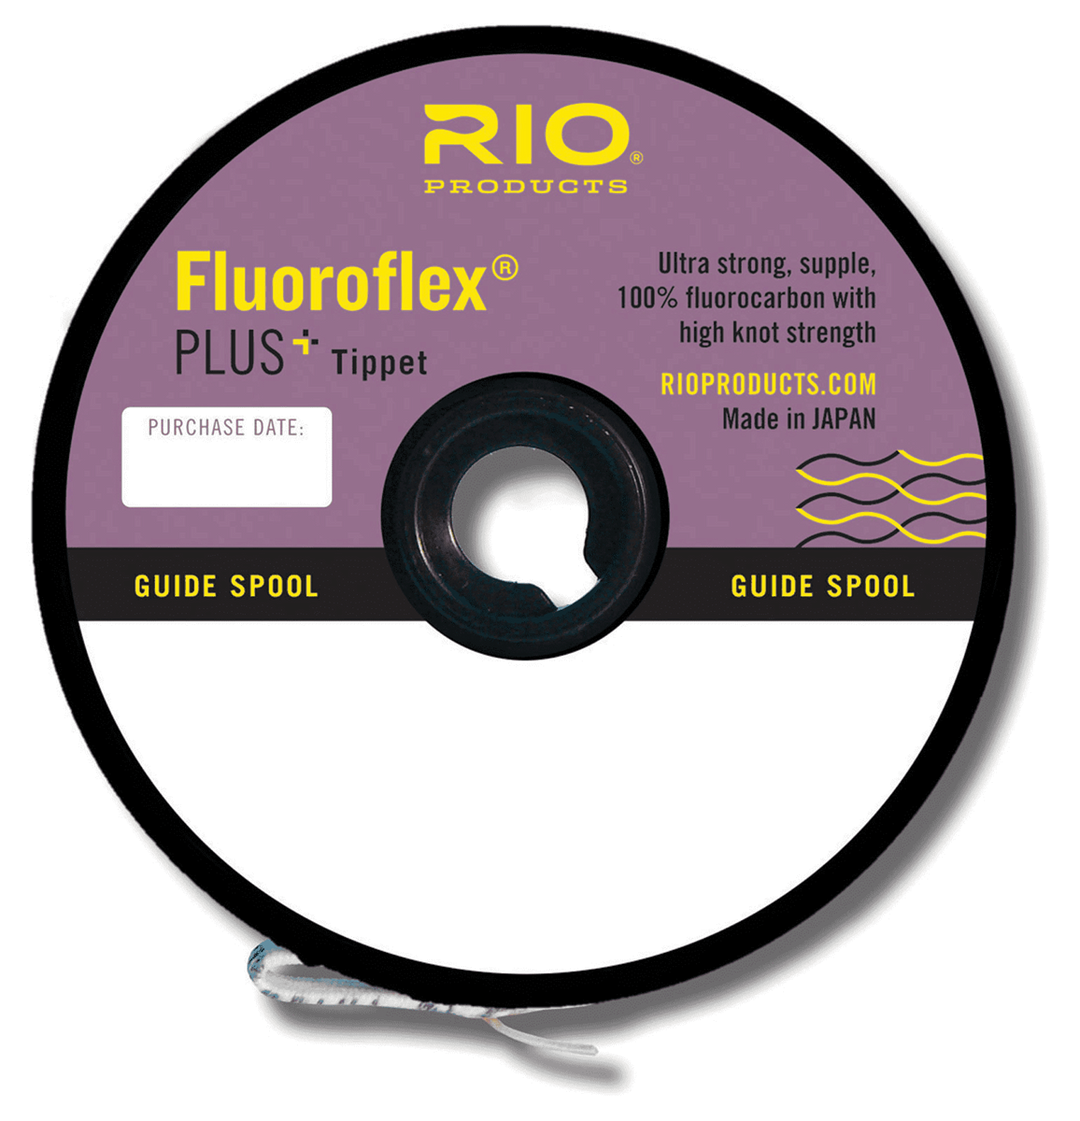 Rio Fluoroflex Plus Tippet - Guide Spool